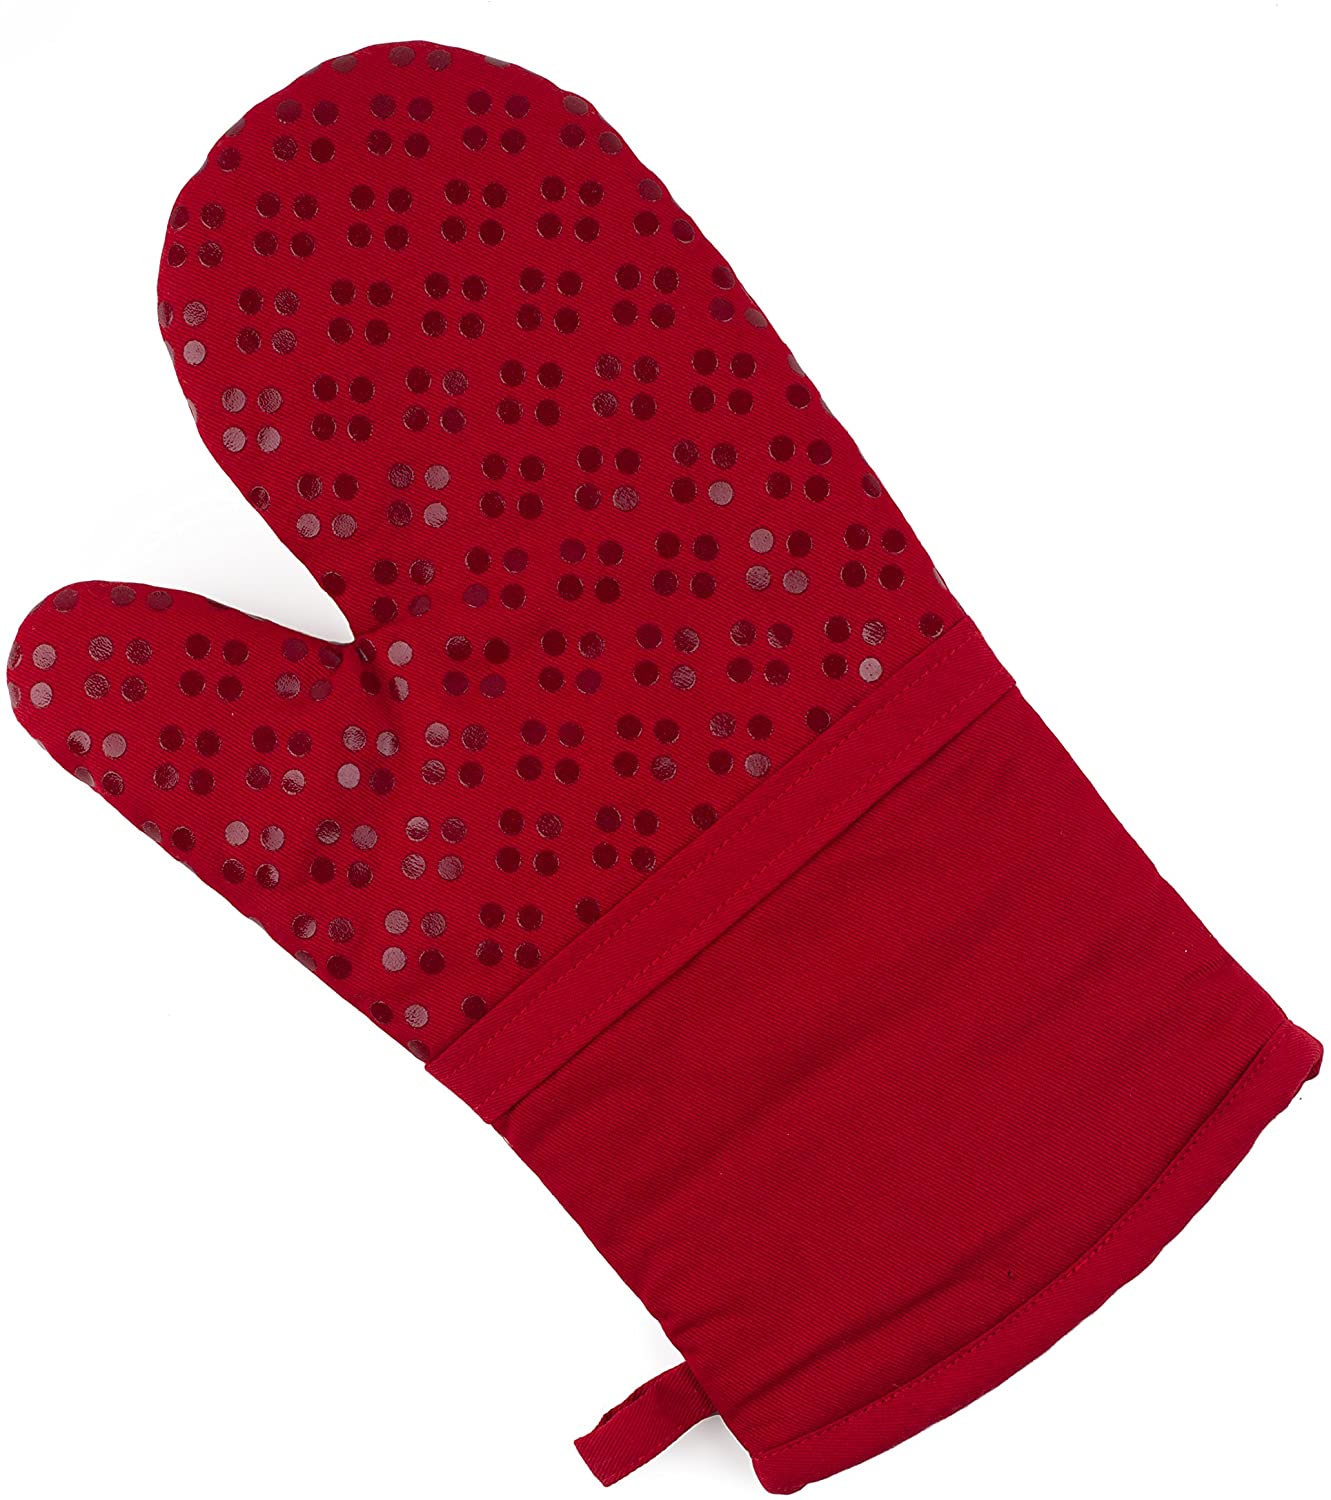 Robin Print Double Oven Gloves - oven mitt - pot holder - Christmas -  kitchenware - kitchen textiles - baking mitts - patterned